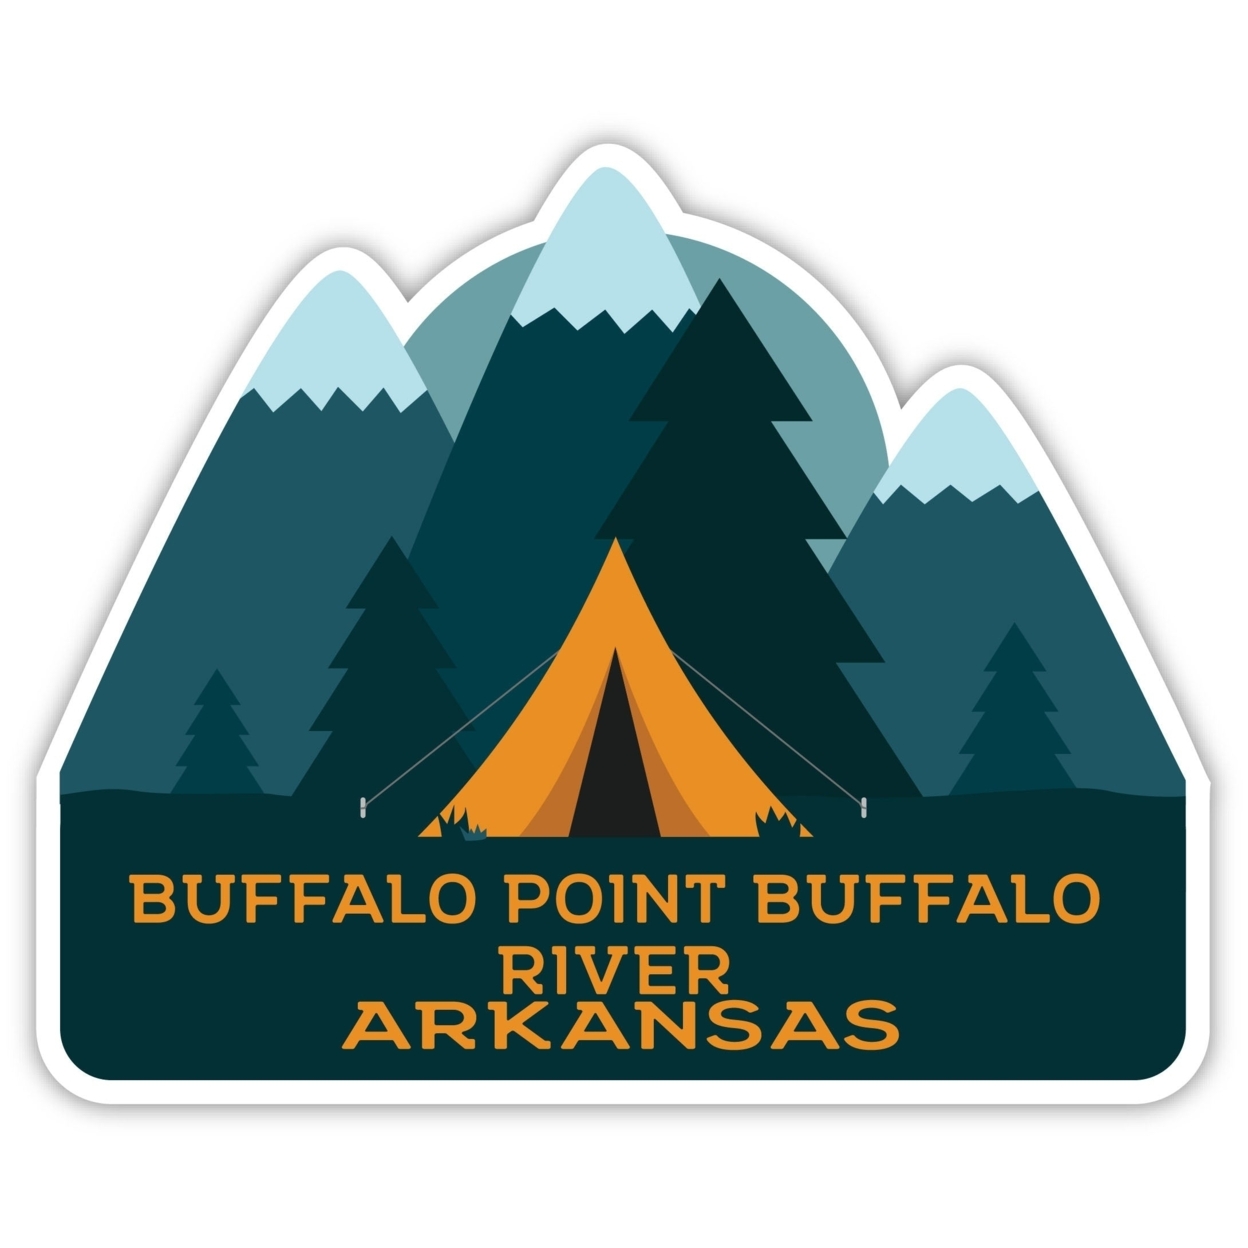 Buffalo Point Buffalo River Arkansas Souvenir Decorative Stickers (Choose Theme And Size) - Single Unit, 2-Inch, Camp Life